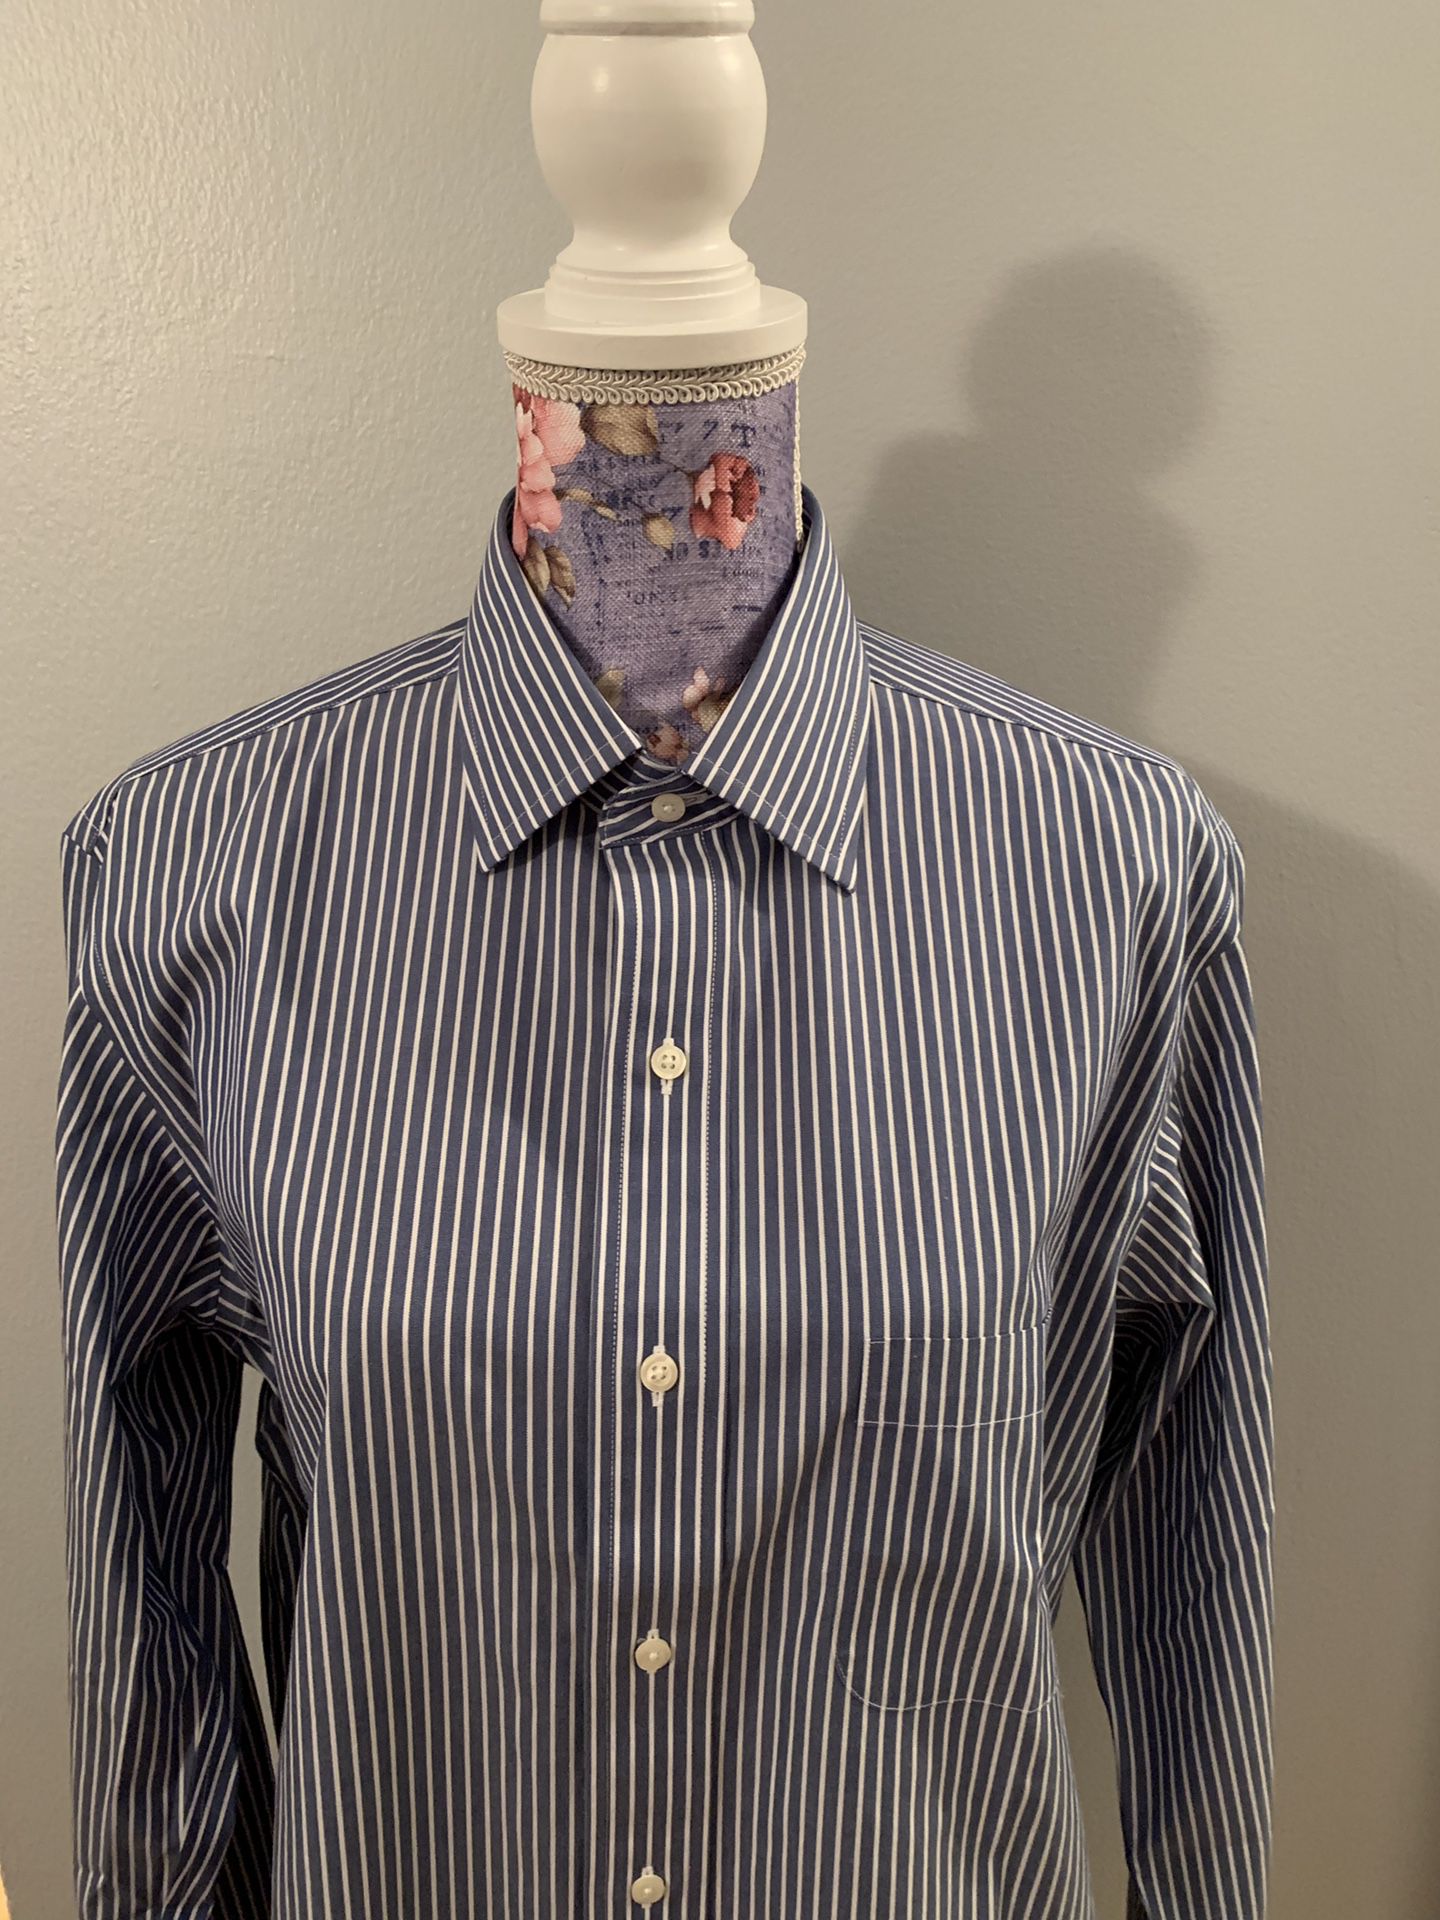 NWT Never Worn Brooks Brothers Milano Button Down Dress Shirt Non-Iron Blue/White Stripe 15.5/35